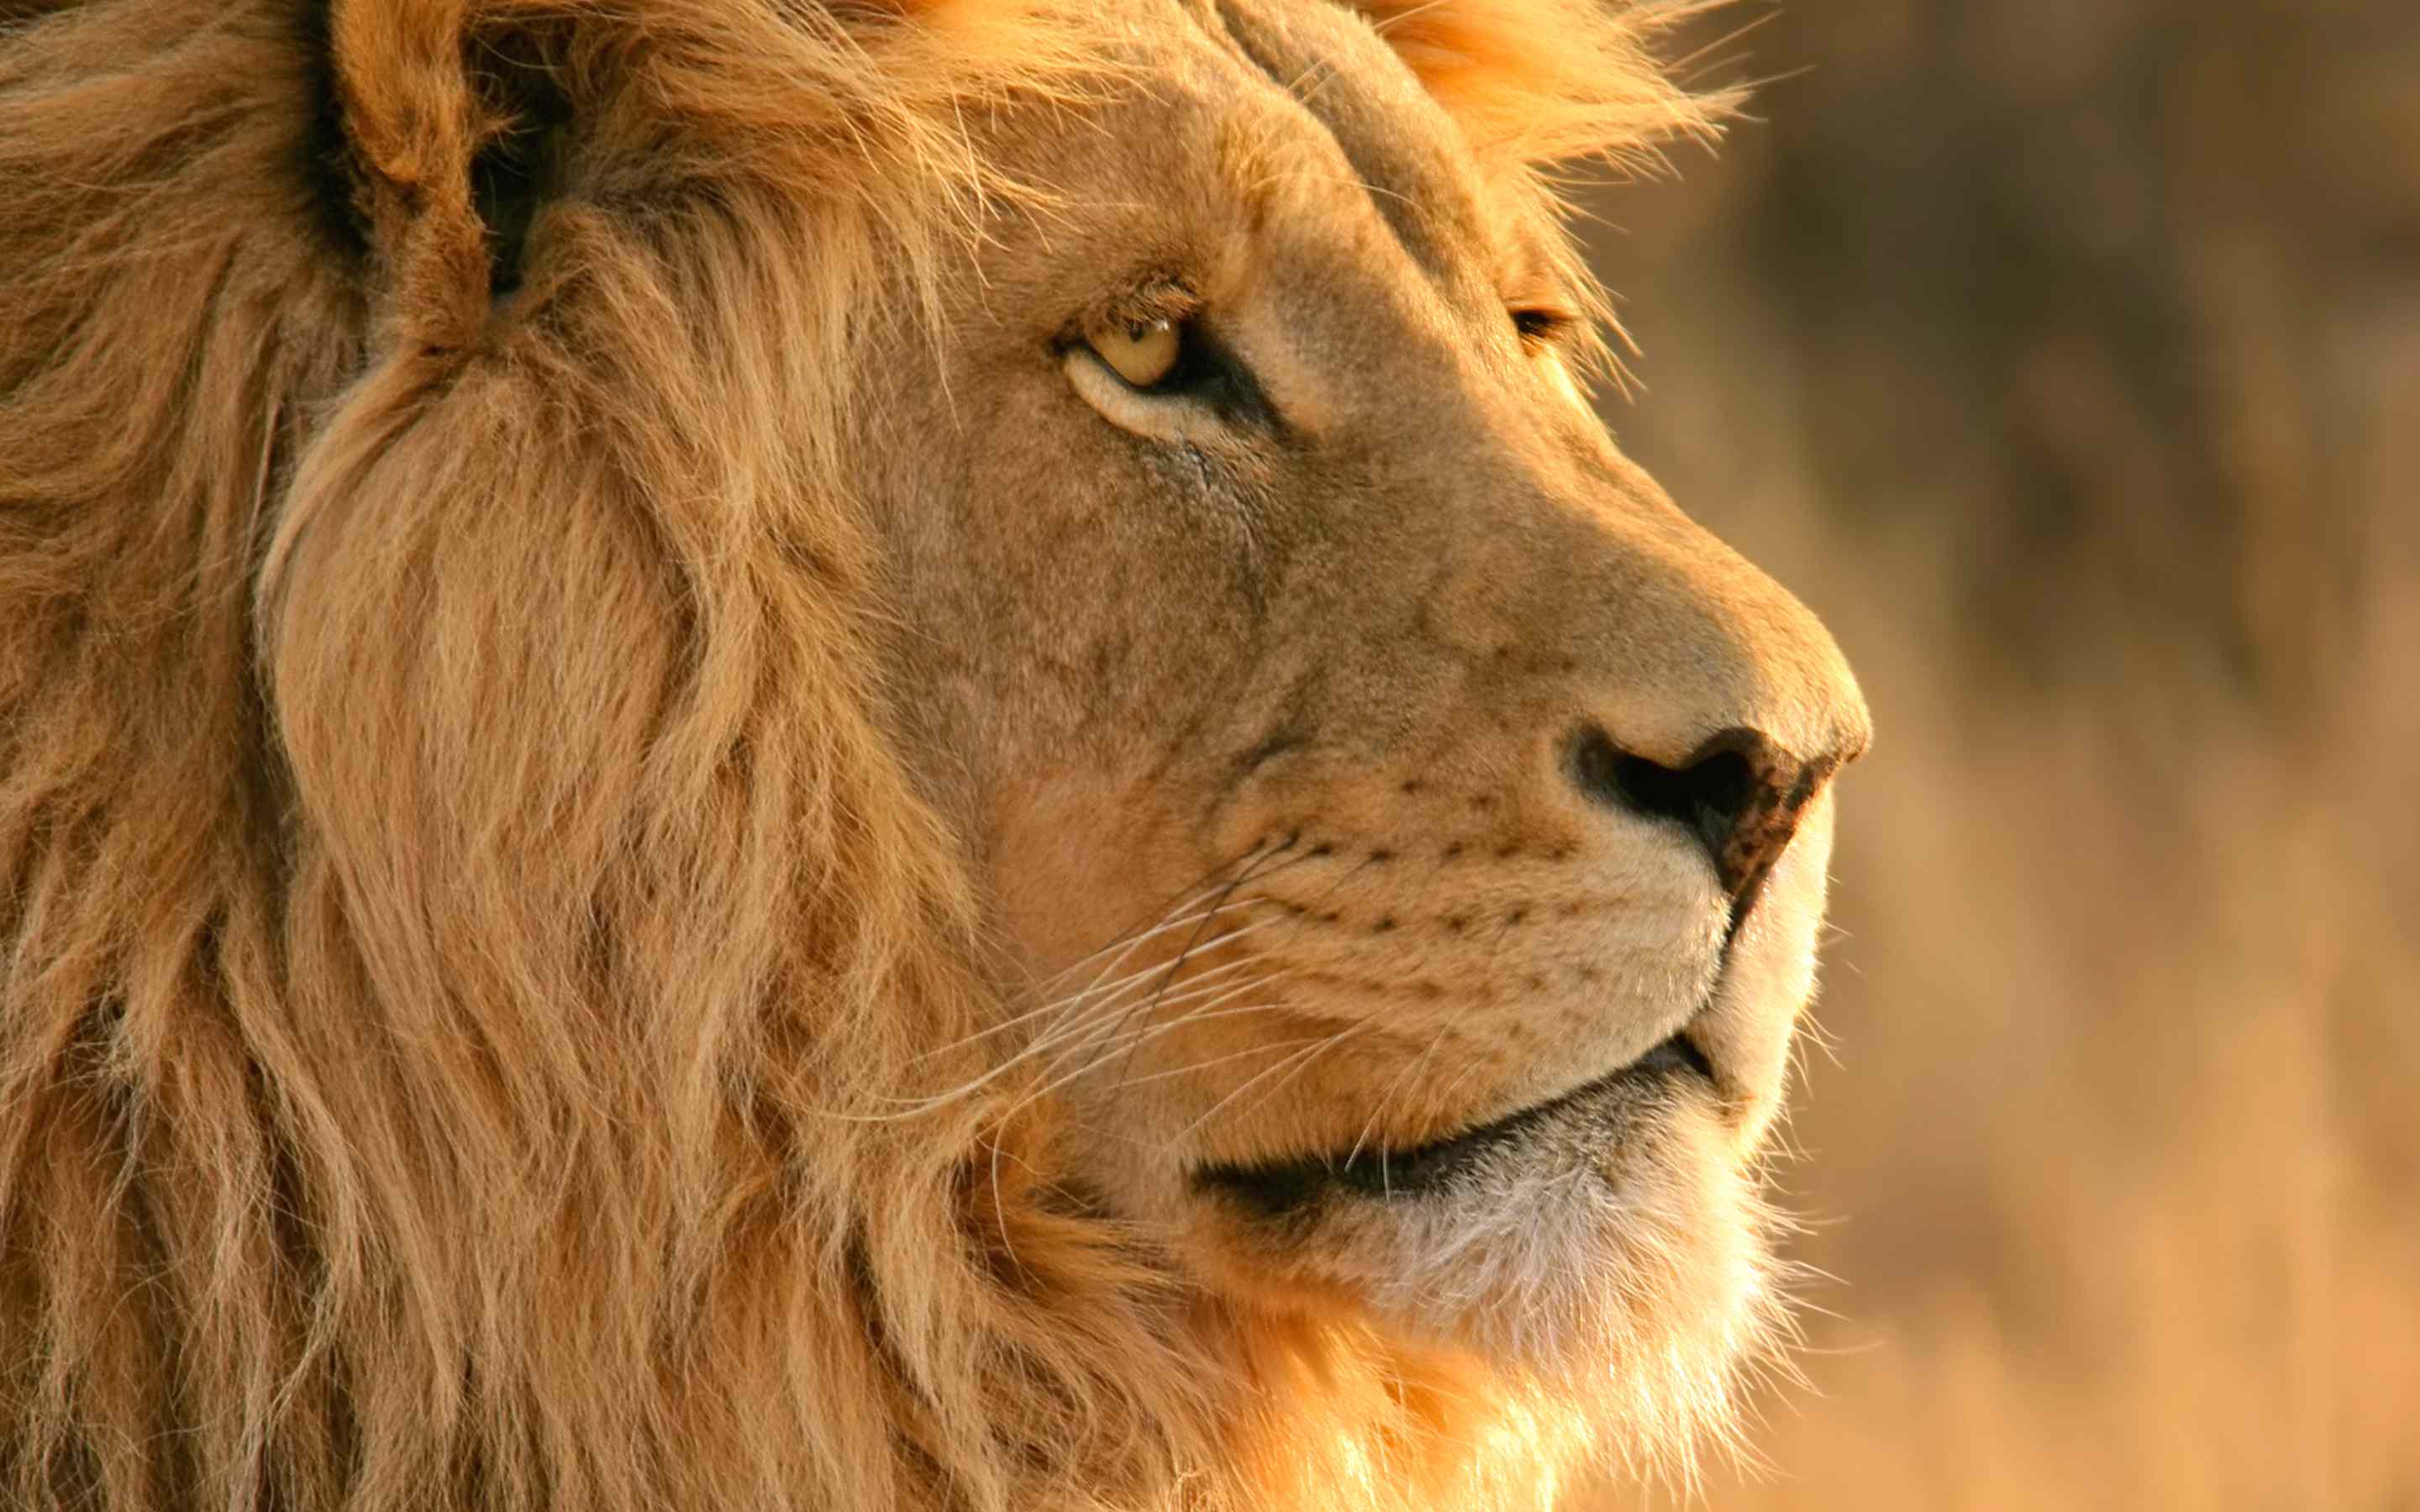 mobile desktop background hd images about lions